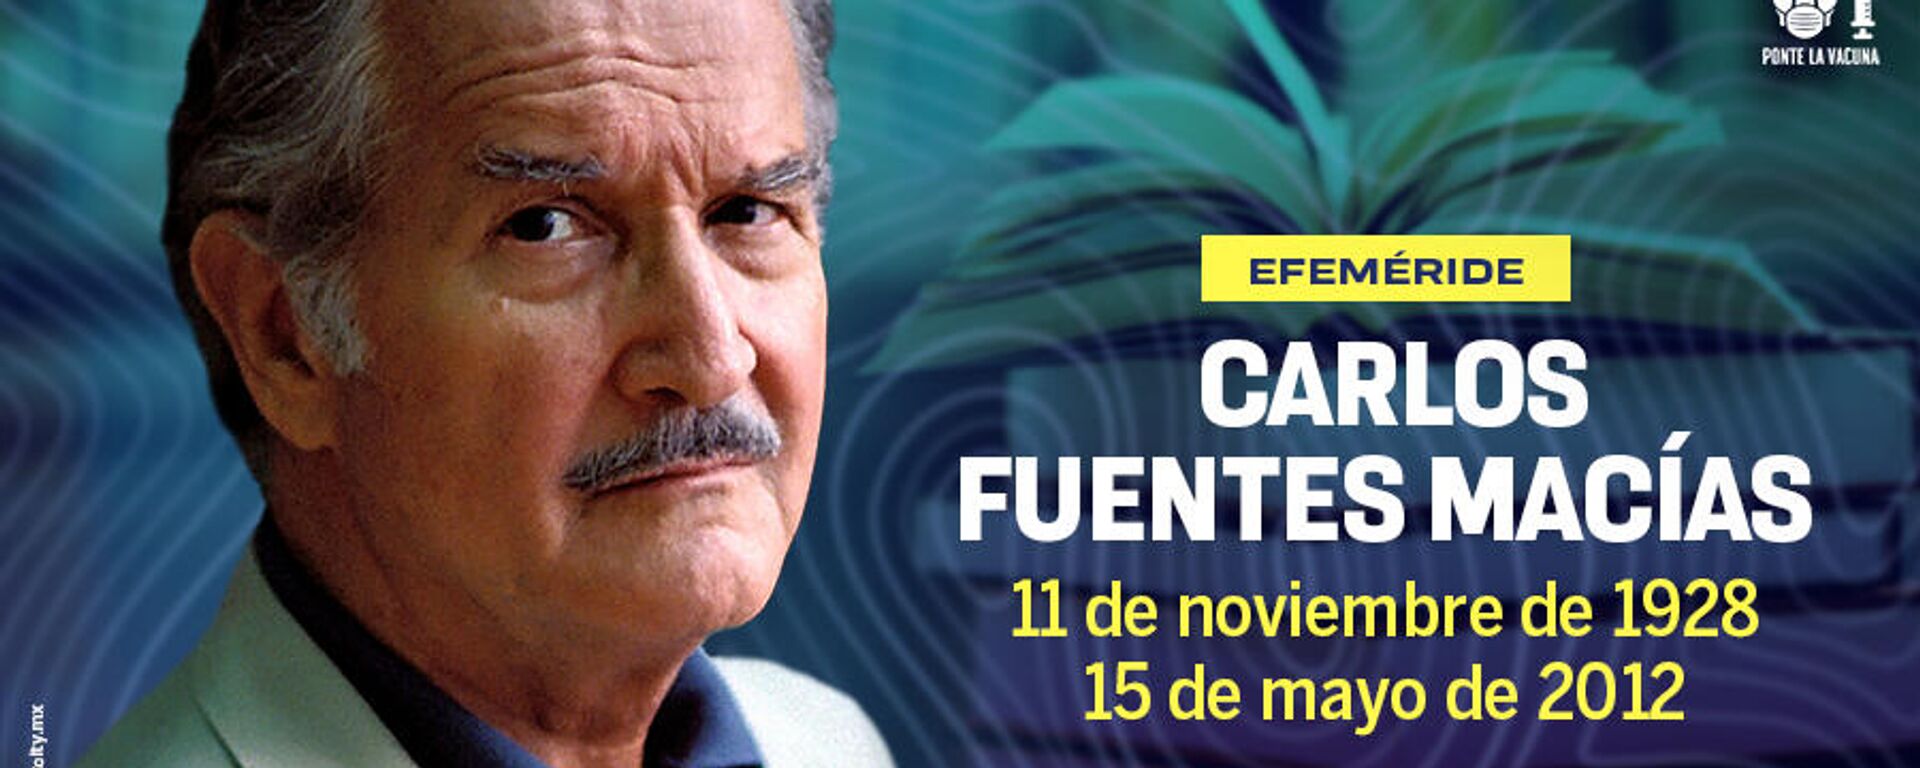 Carlos Fuentes, novelista mexicano - Sputnik Mundo, 1920, 11.11.2021